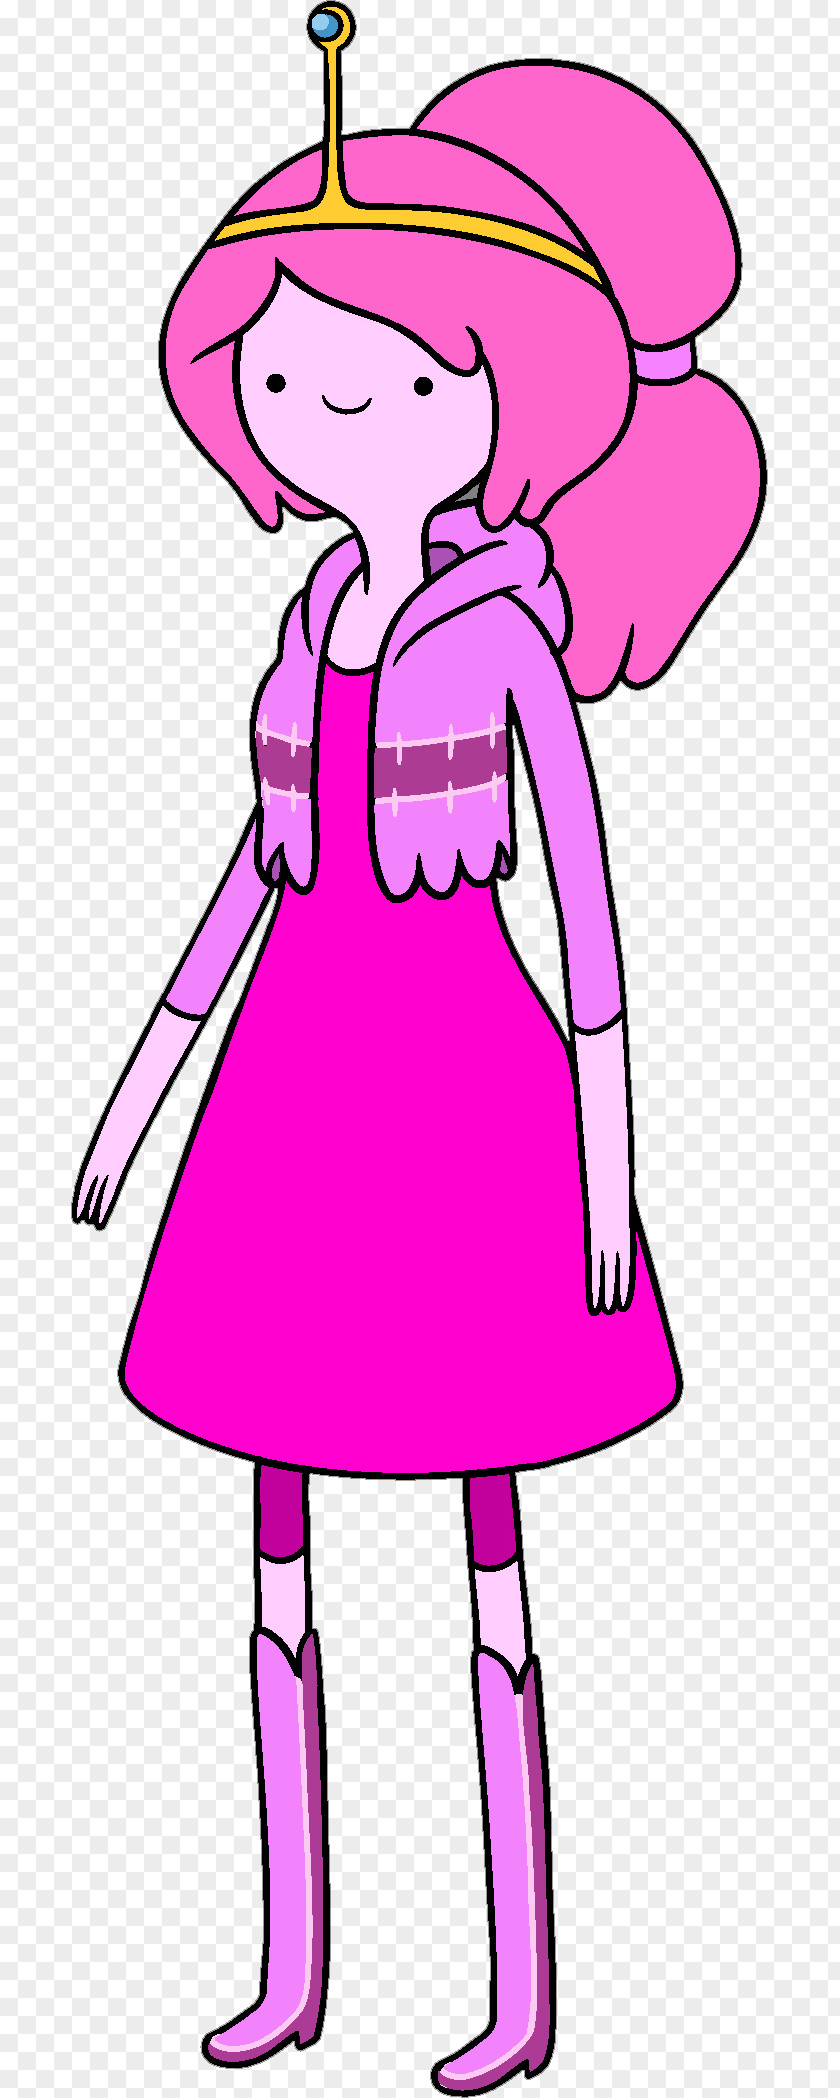 Adventure Time Marceline The Vampire Queen Ice King Chewing Gum Raven Princess Bubblegum PNG